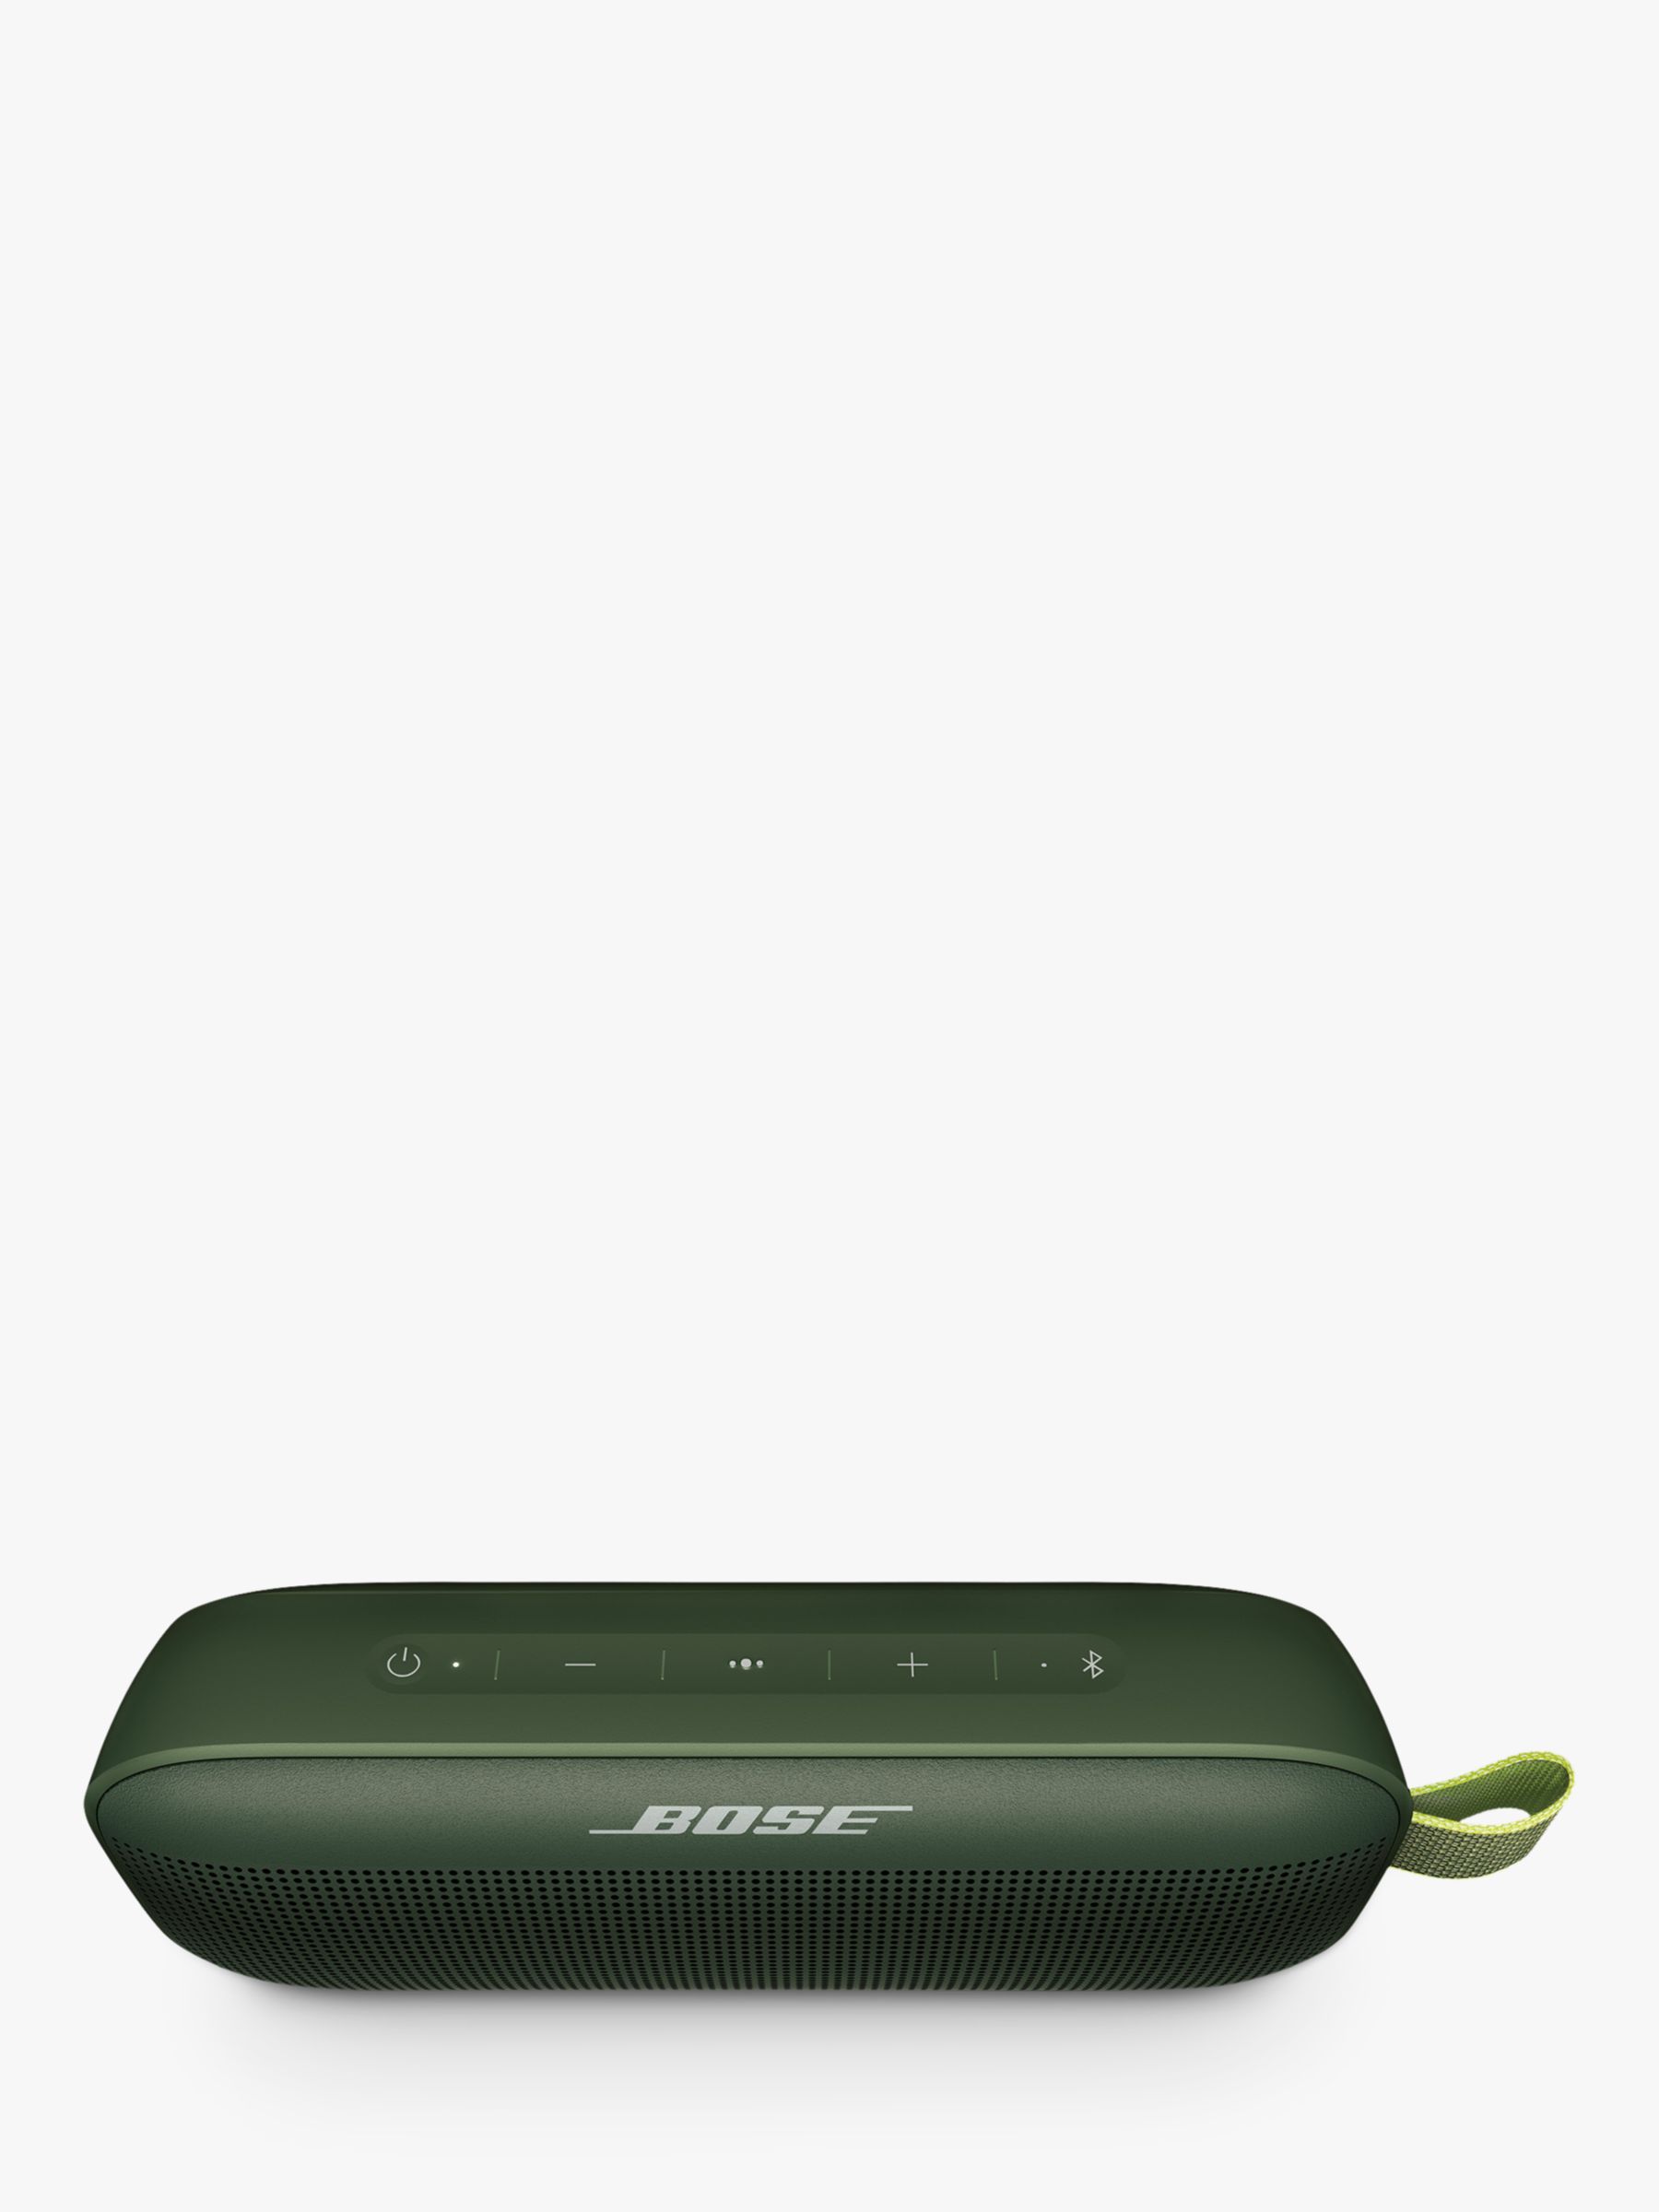 Bose SoundLink Flex Water-resistant Portable Speaker Speakerphone, Green Bluetooth Built-in with